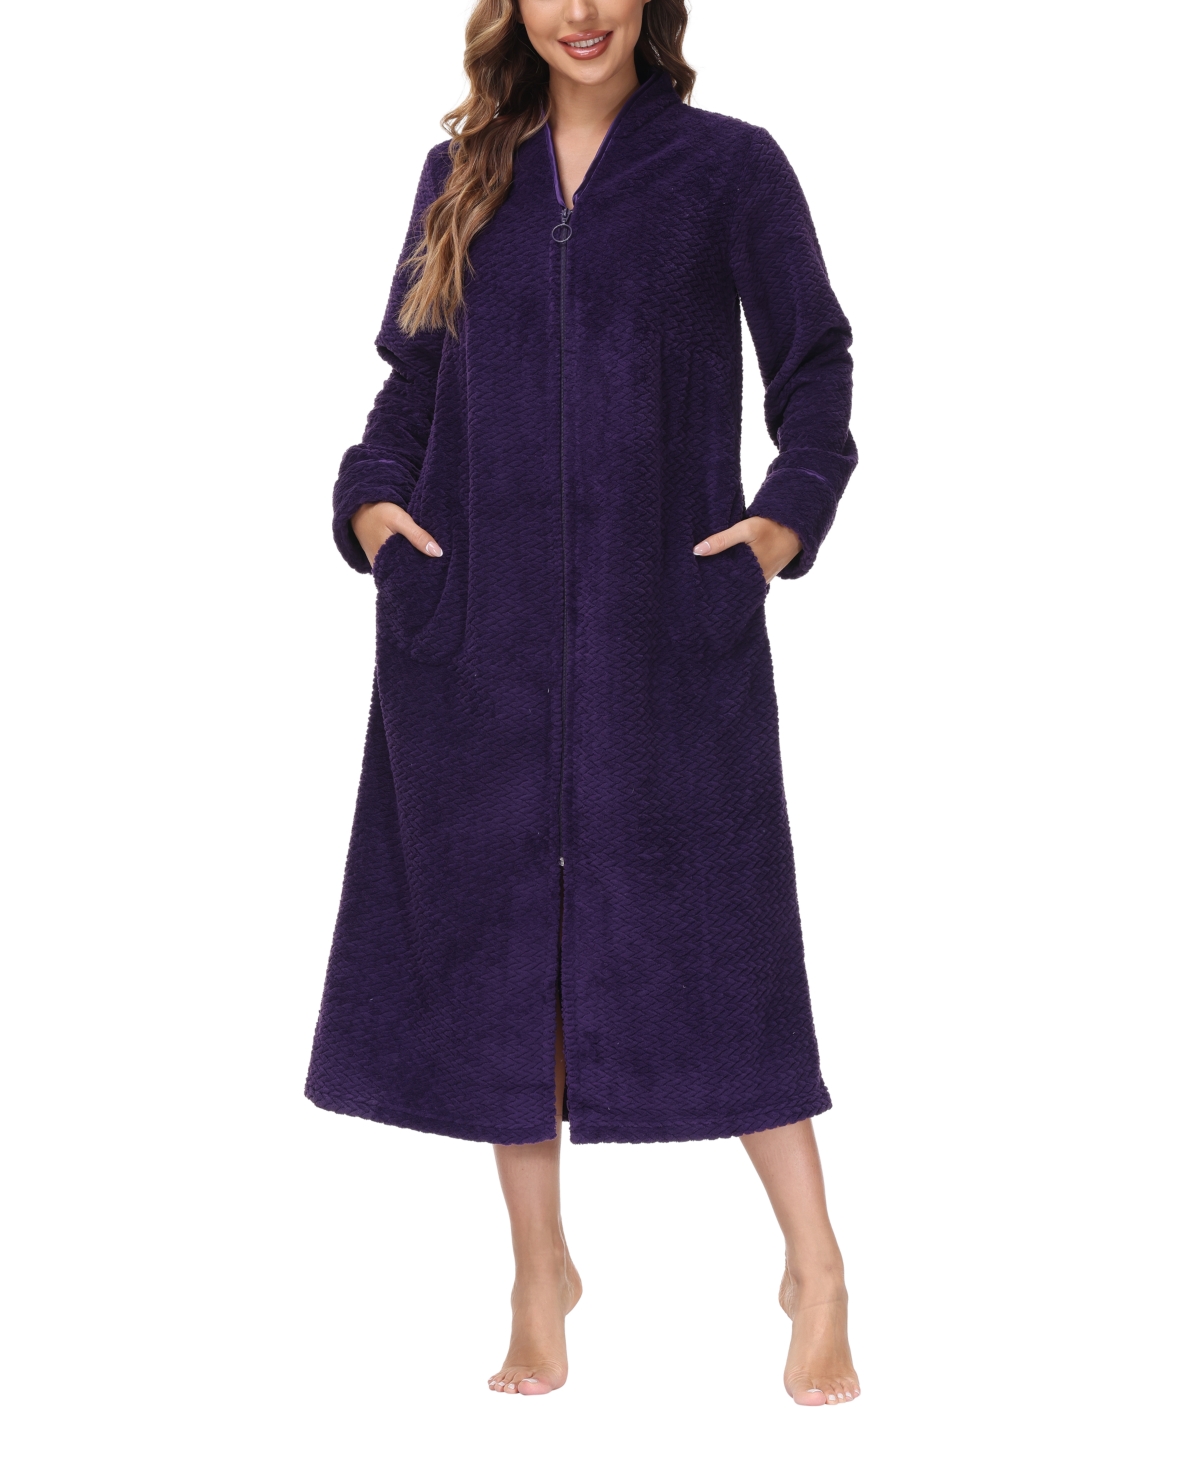 Women's Front Zipper Plush Robe - Rich Concord